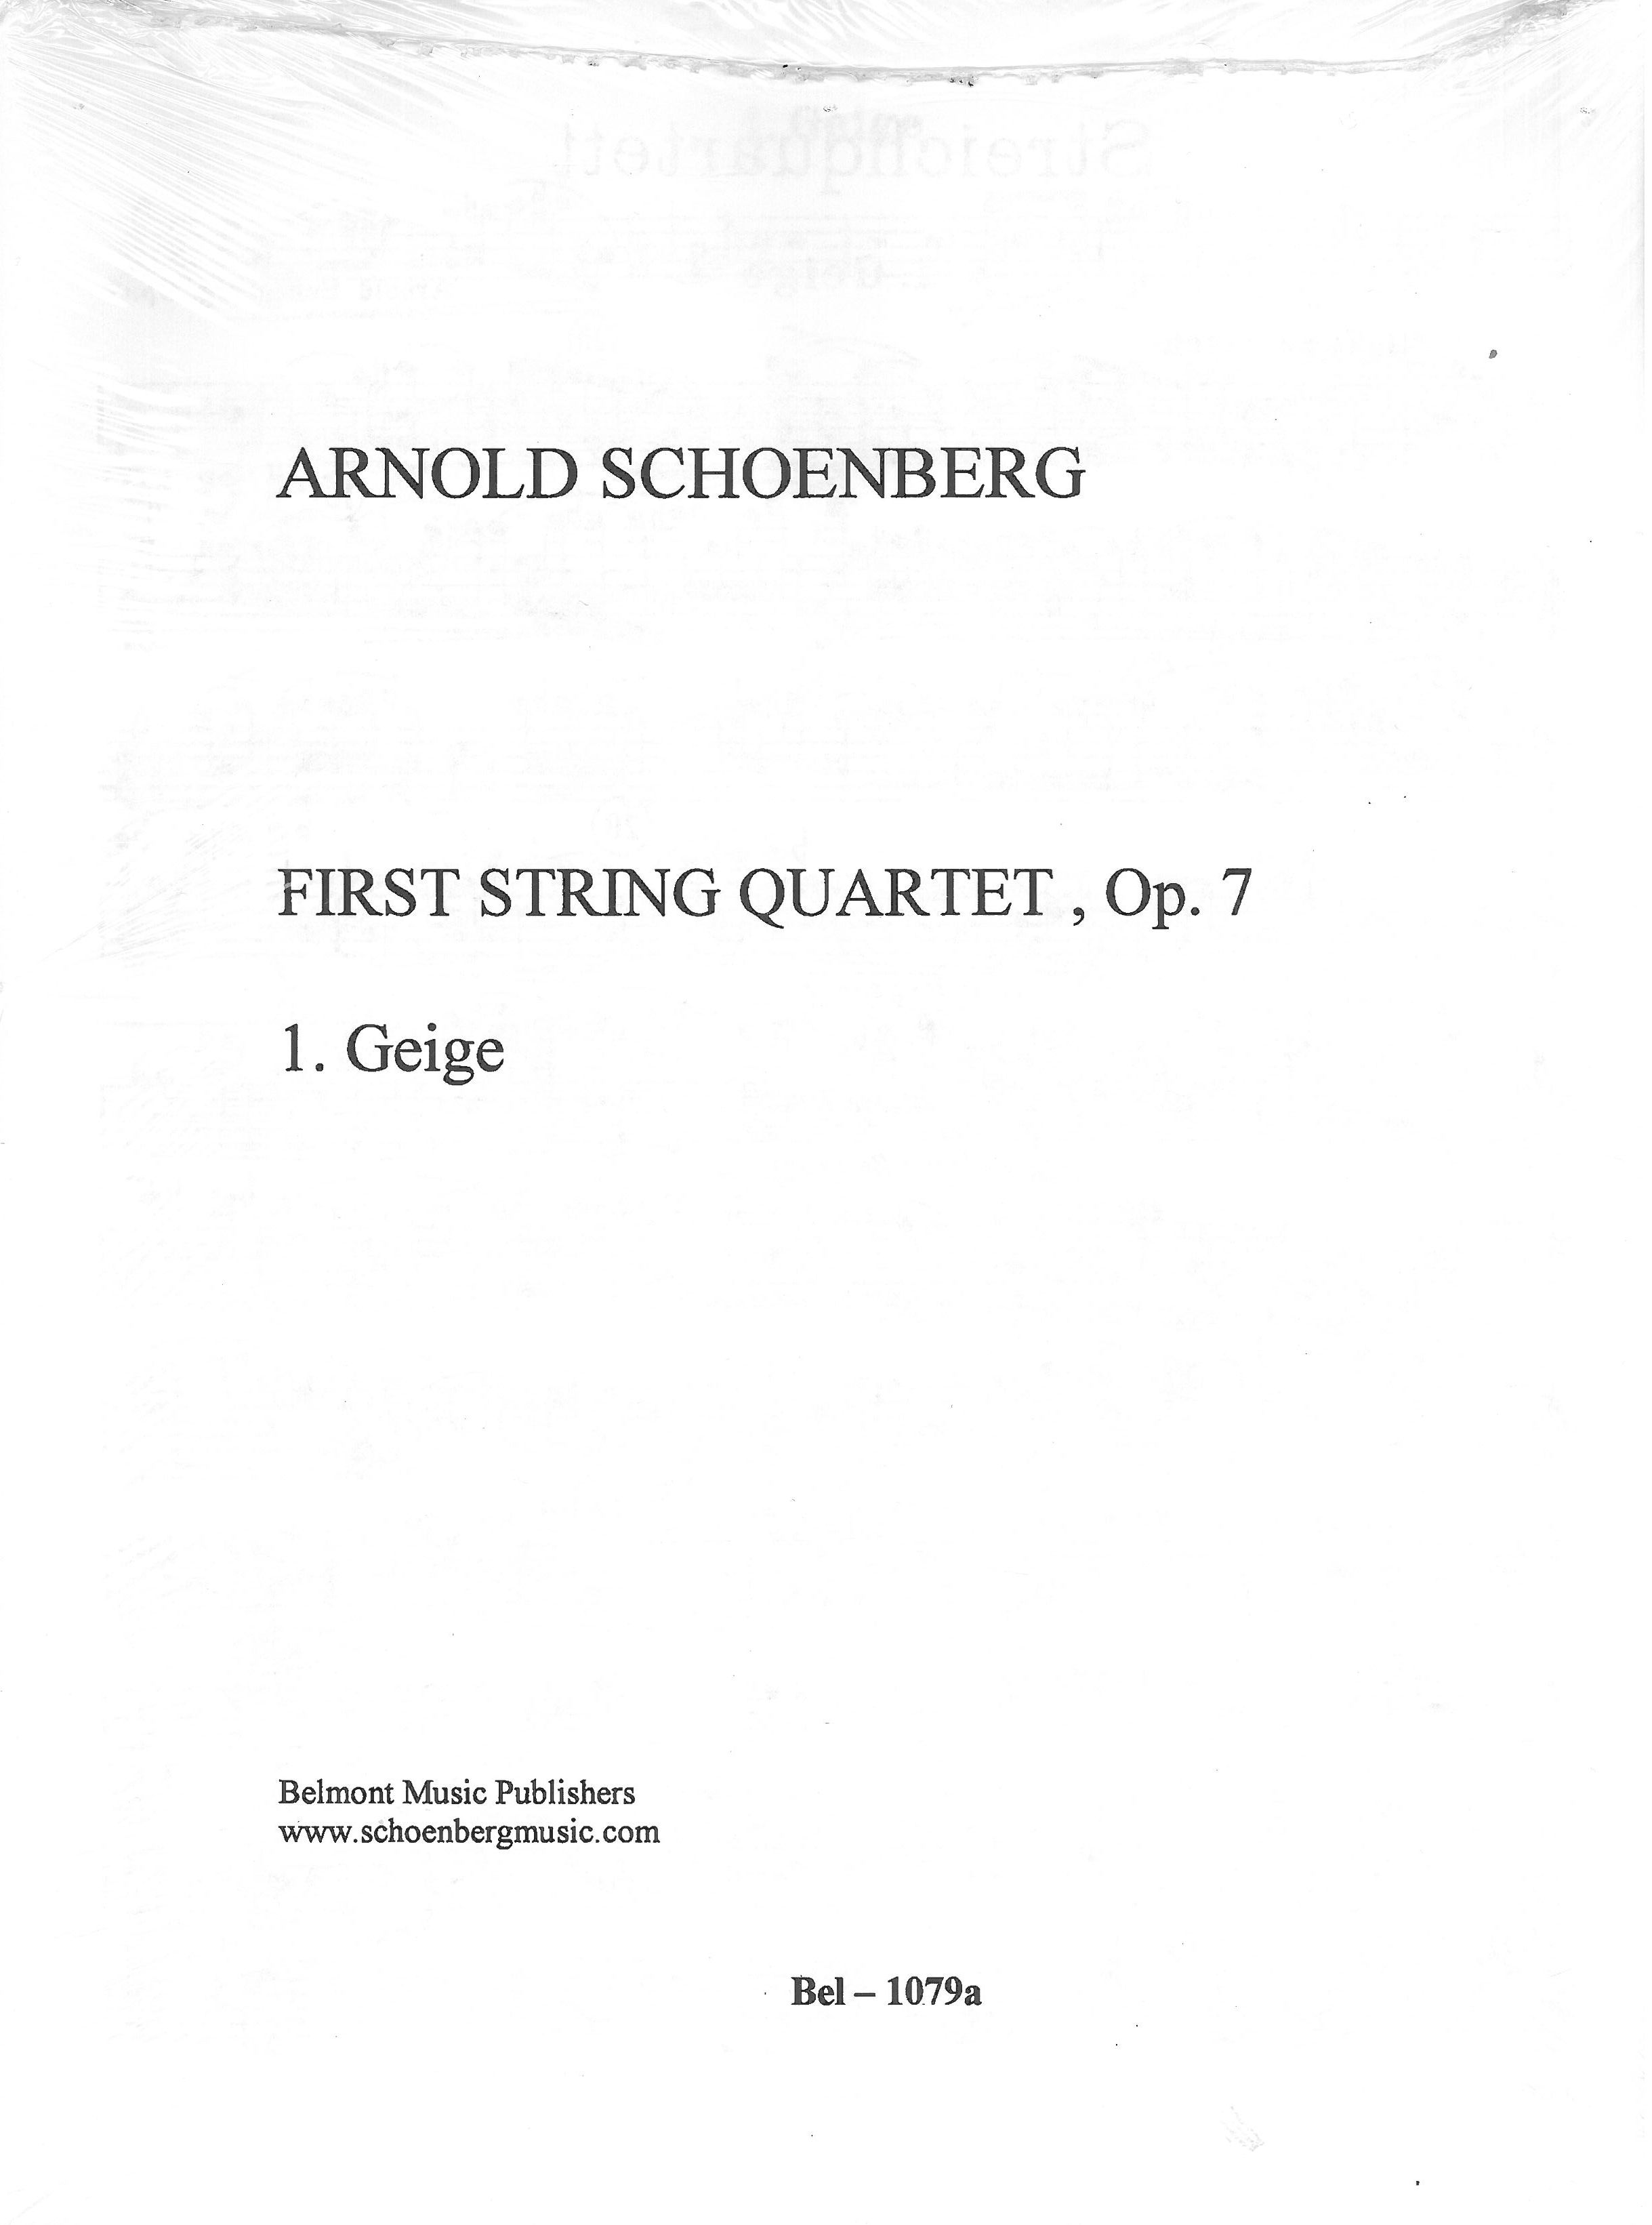 String Quartet No. 1, Op. 7.